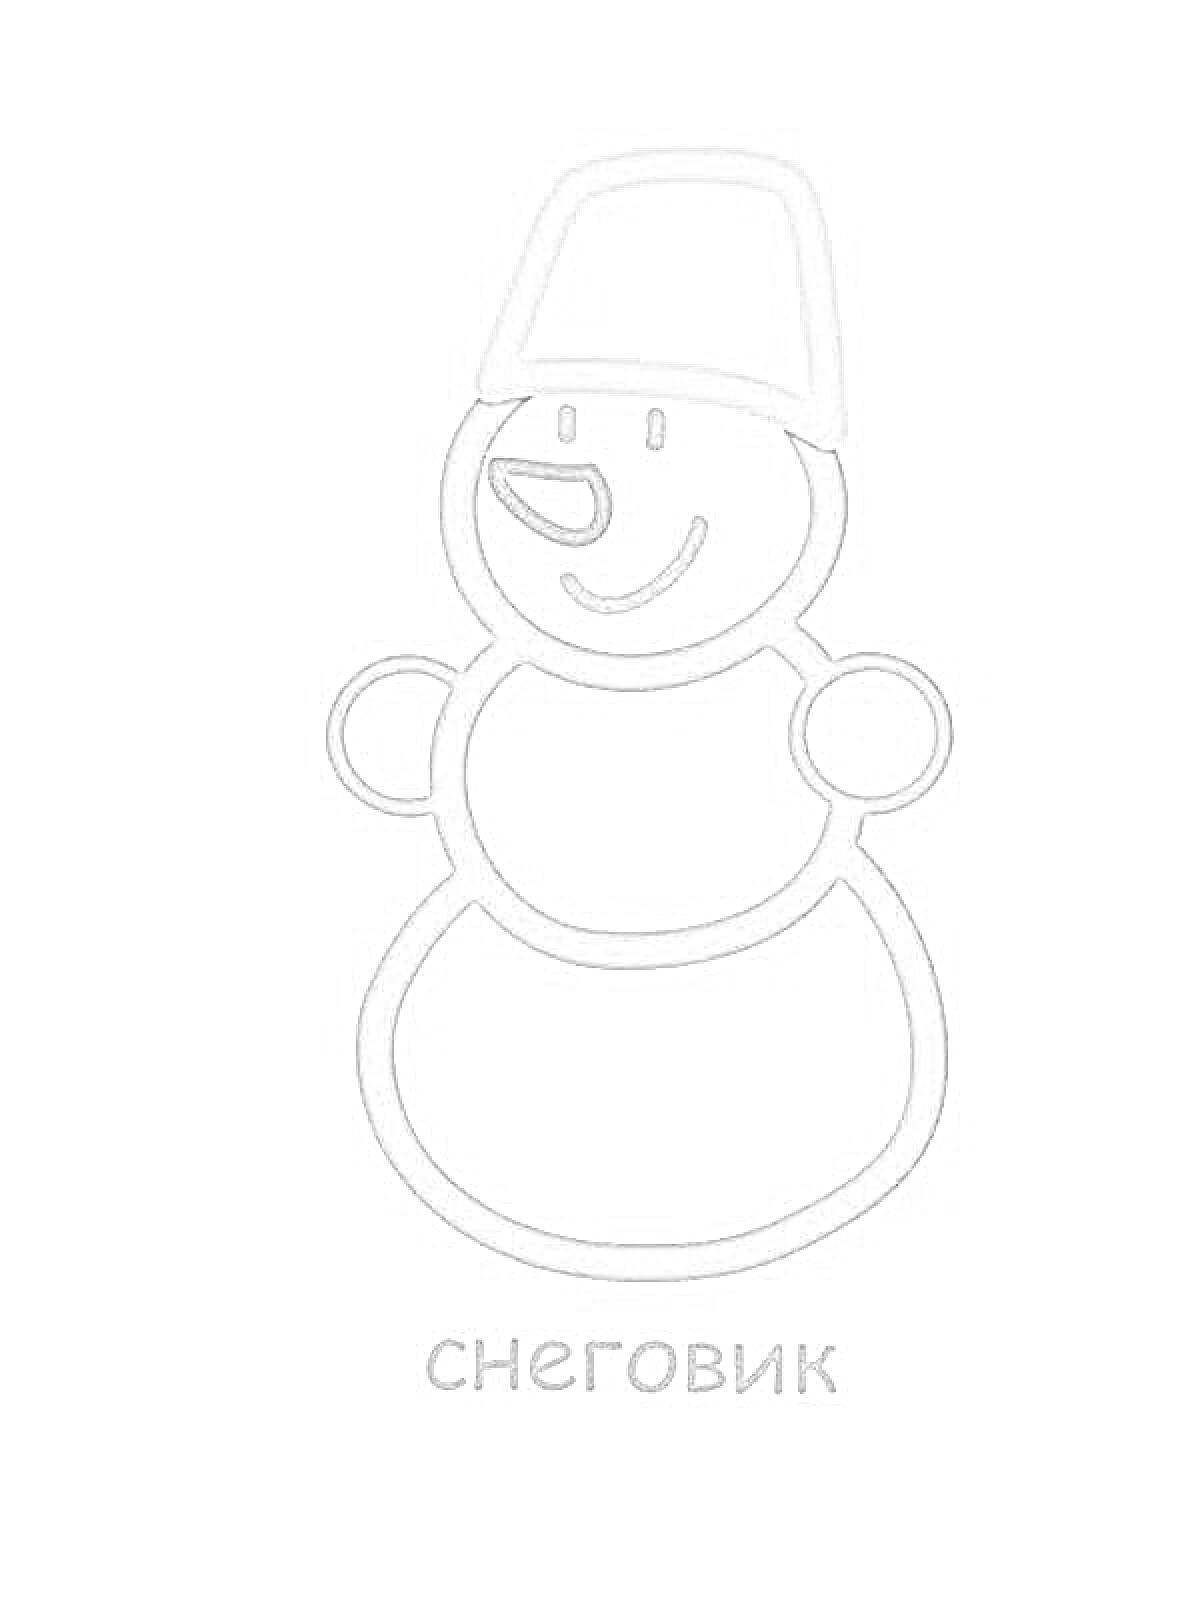 Раскраска Снеговик с ведром на голове и руками-кругами